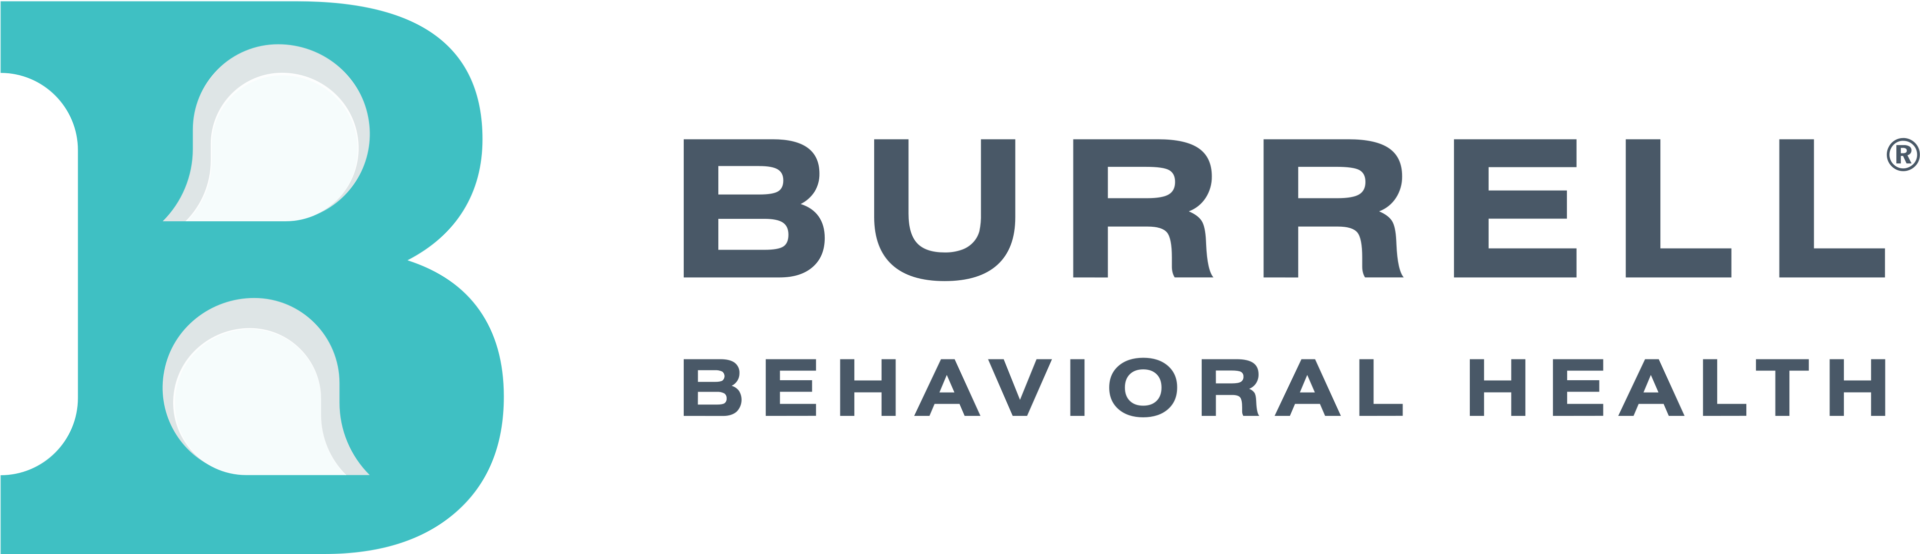 Burrell-Behavioral-Health-logo